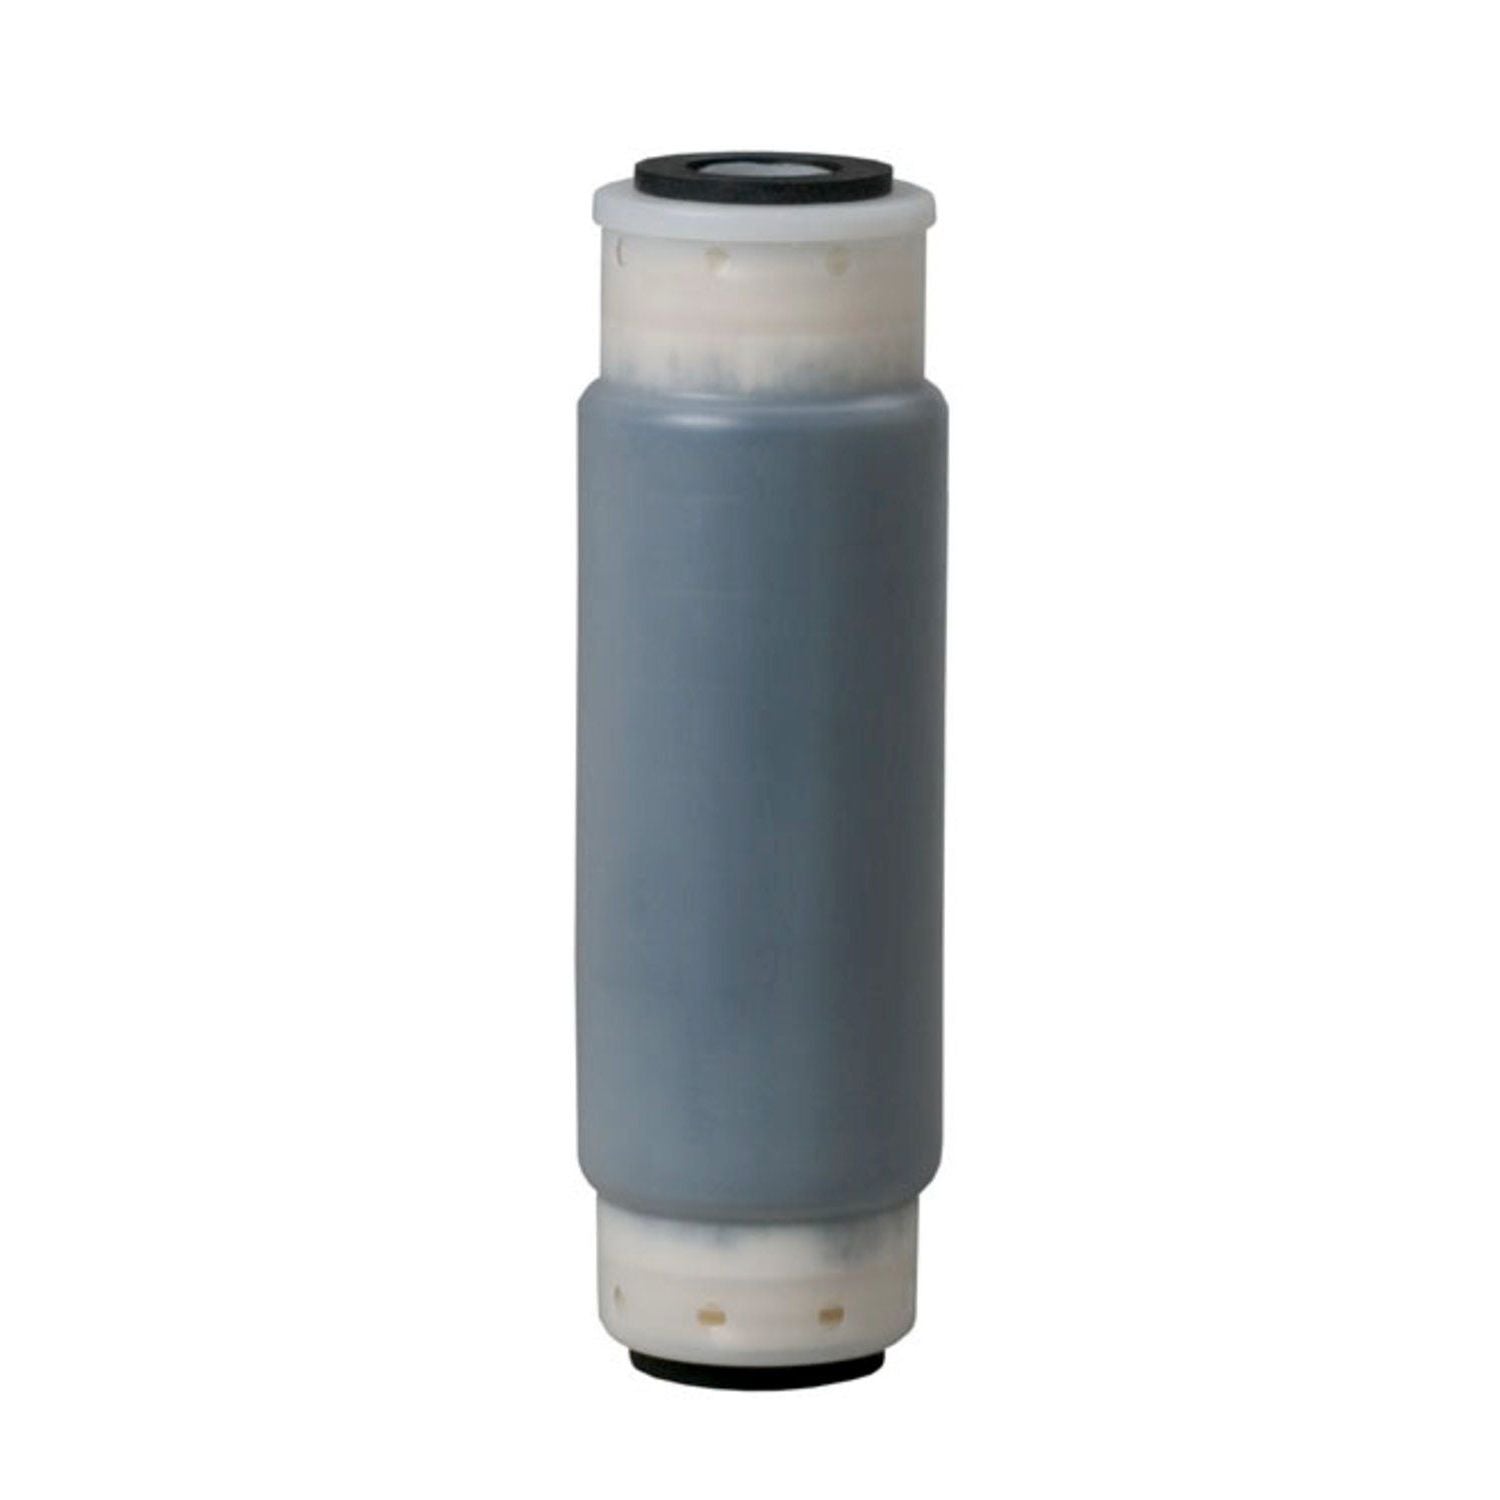 3M Aqua-Pure APS117 Chlorine Taste and Odor Replacement Filter